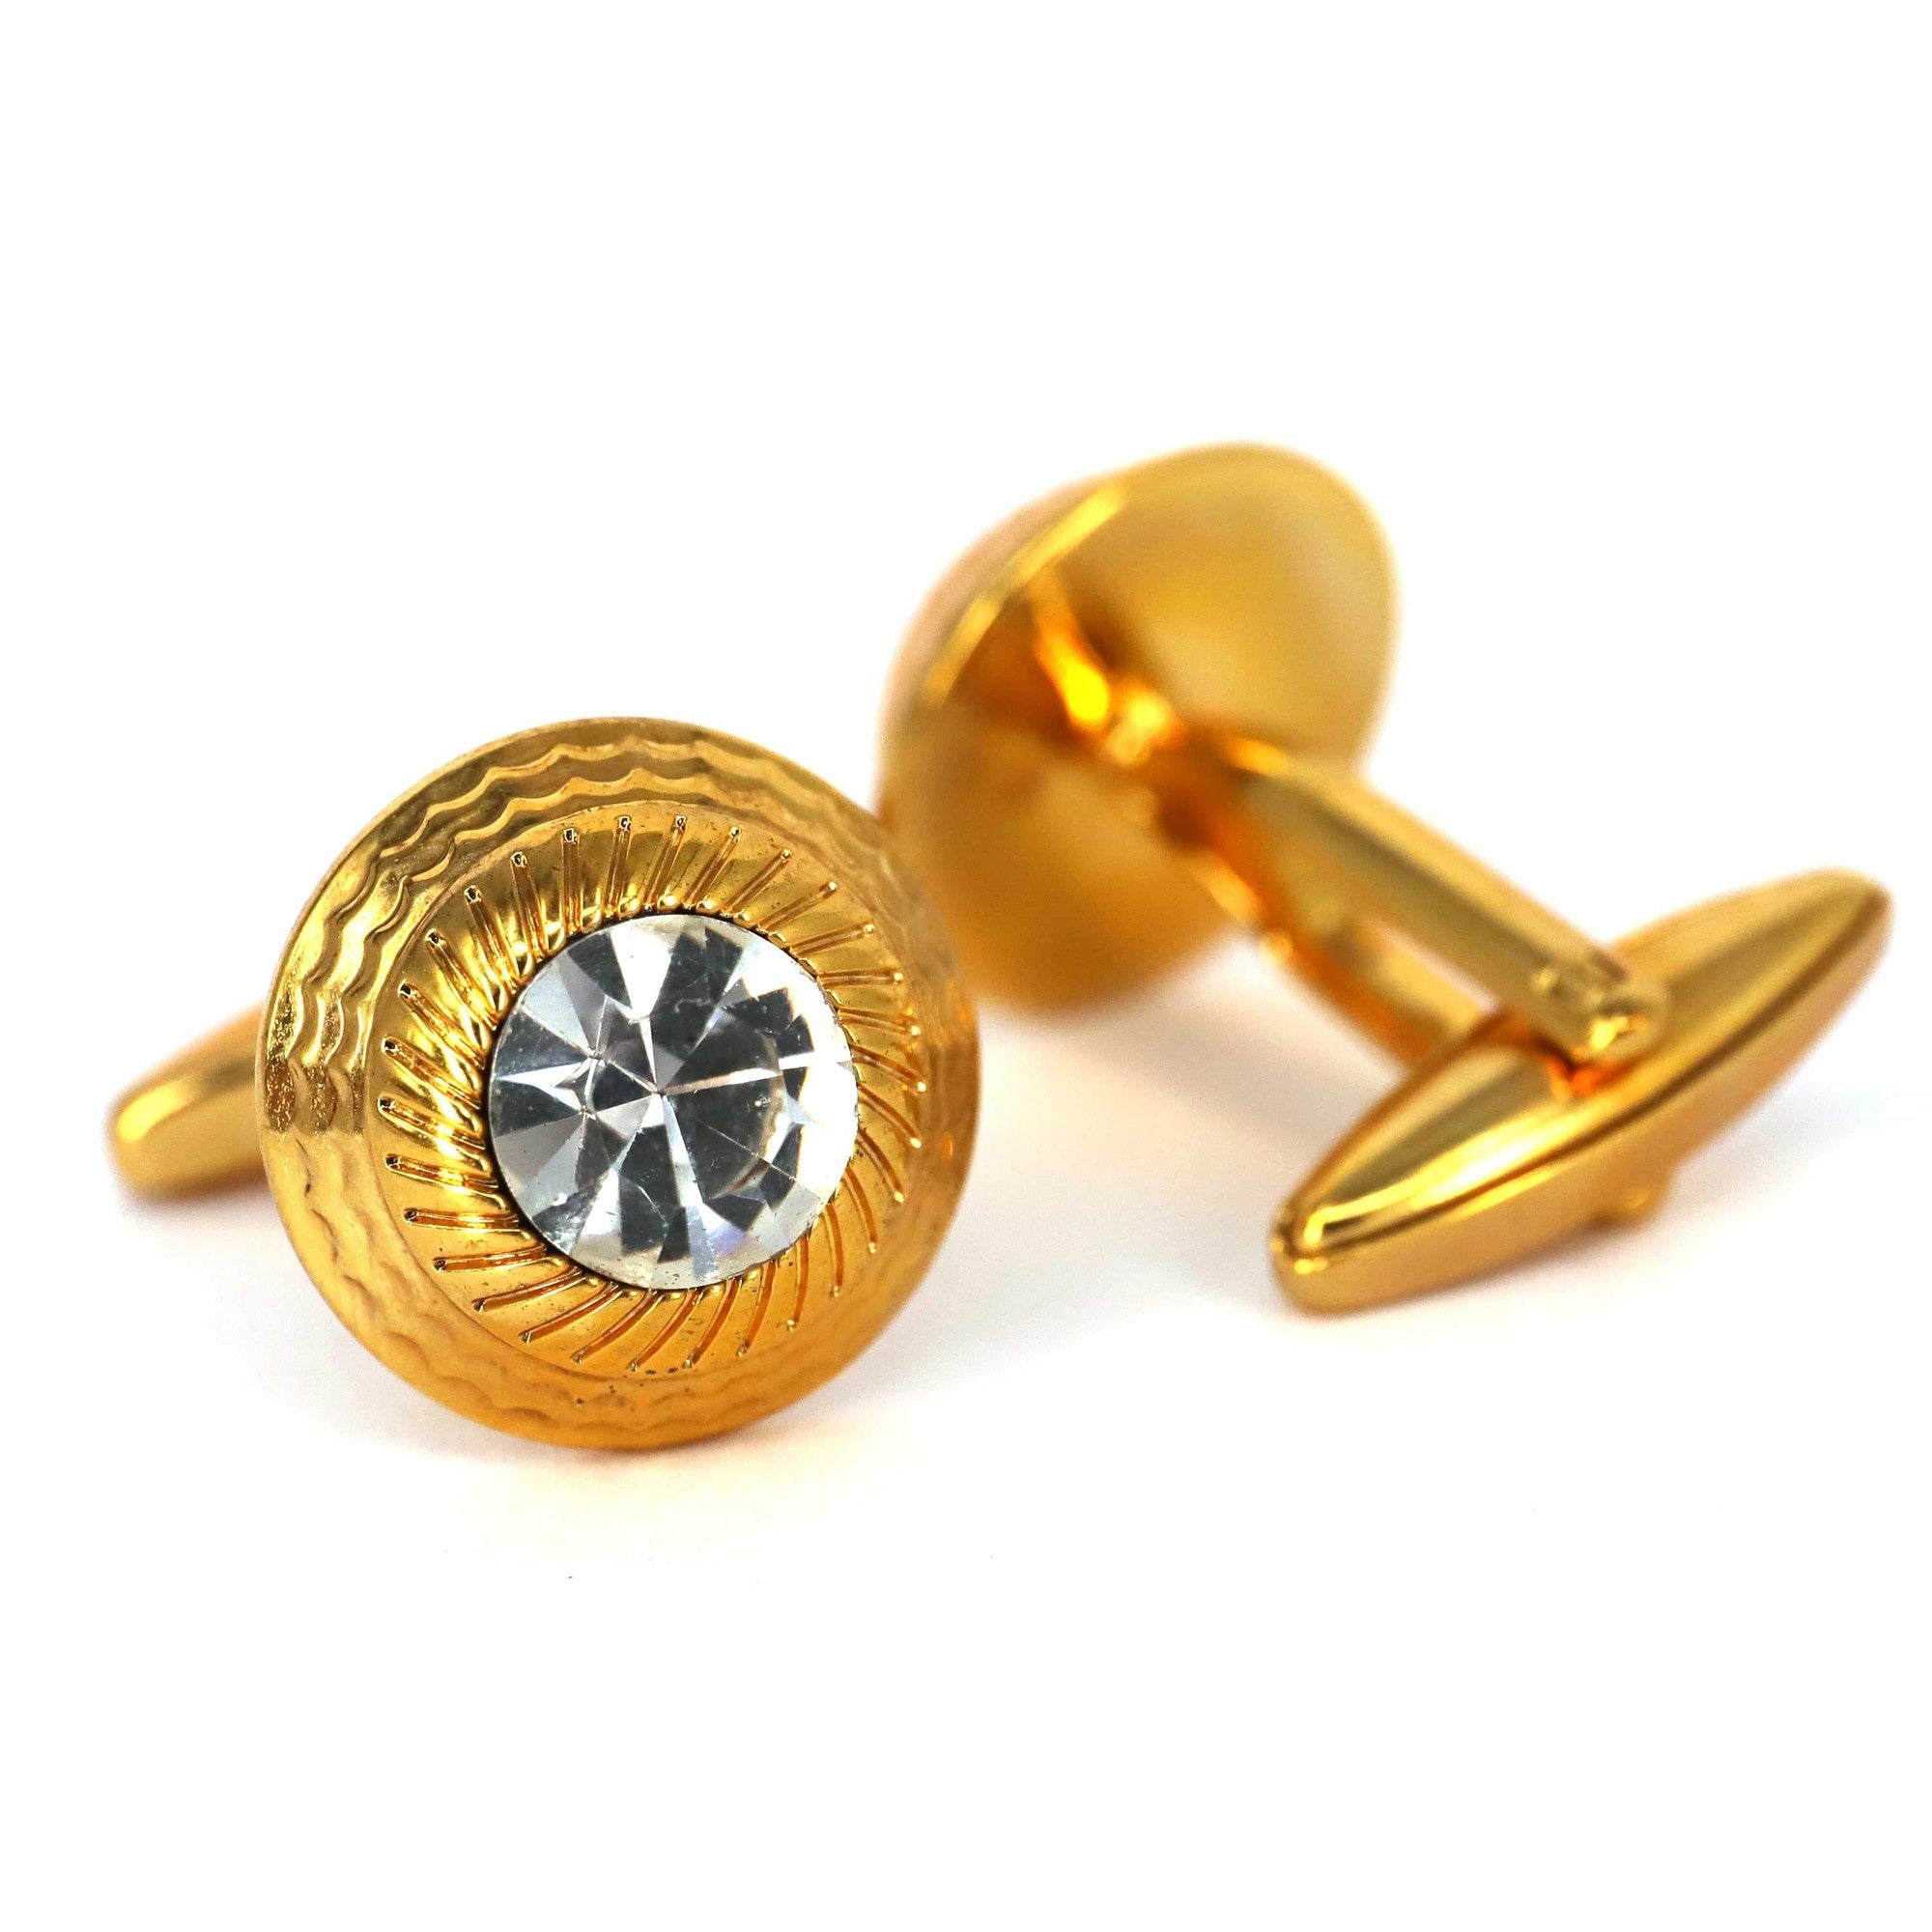 Gold Round Cufflinks with Clear Crystal Elements-Cufflinks-marzthomson-Cufflinks.com.sg